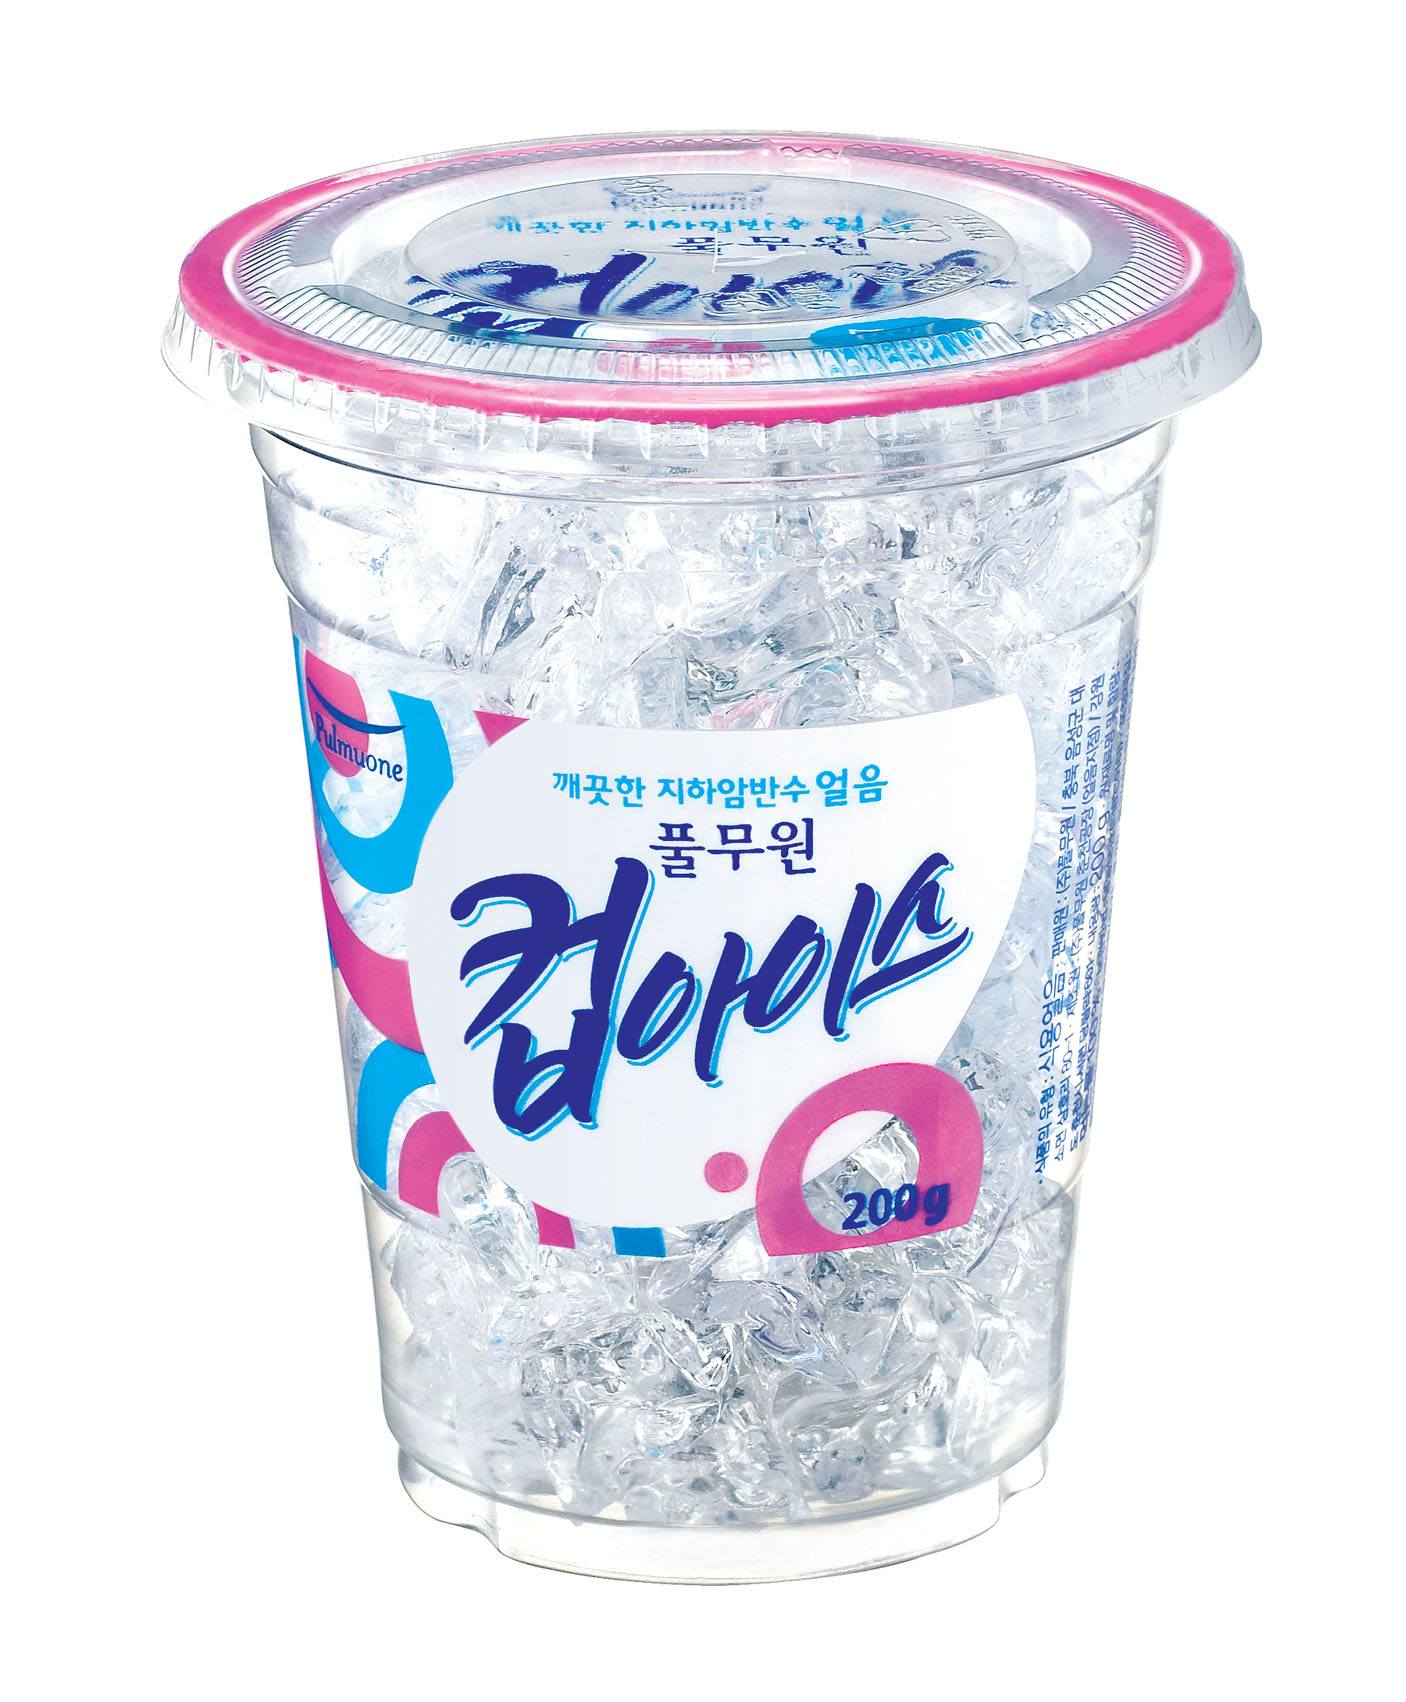 https://koreaboo-cdn.storage.googleapis.com/2017/09/ice-cup-1.jpg